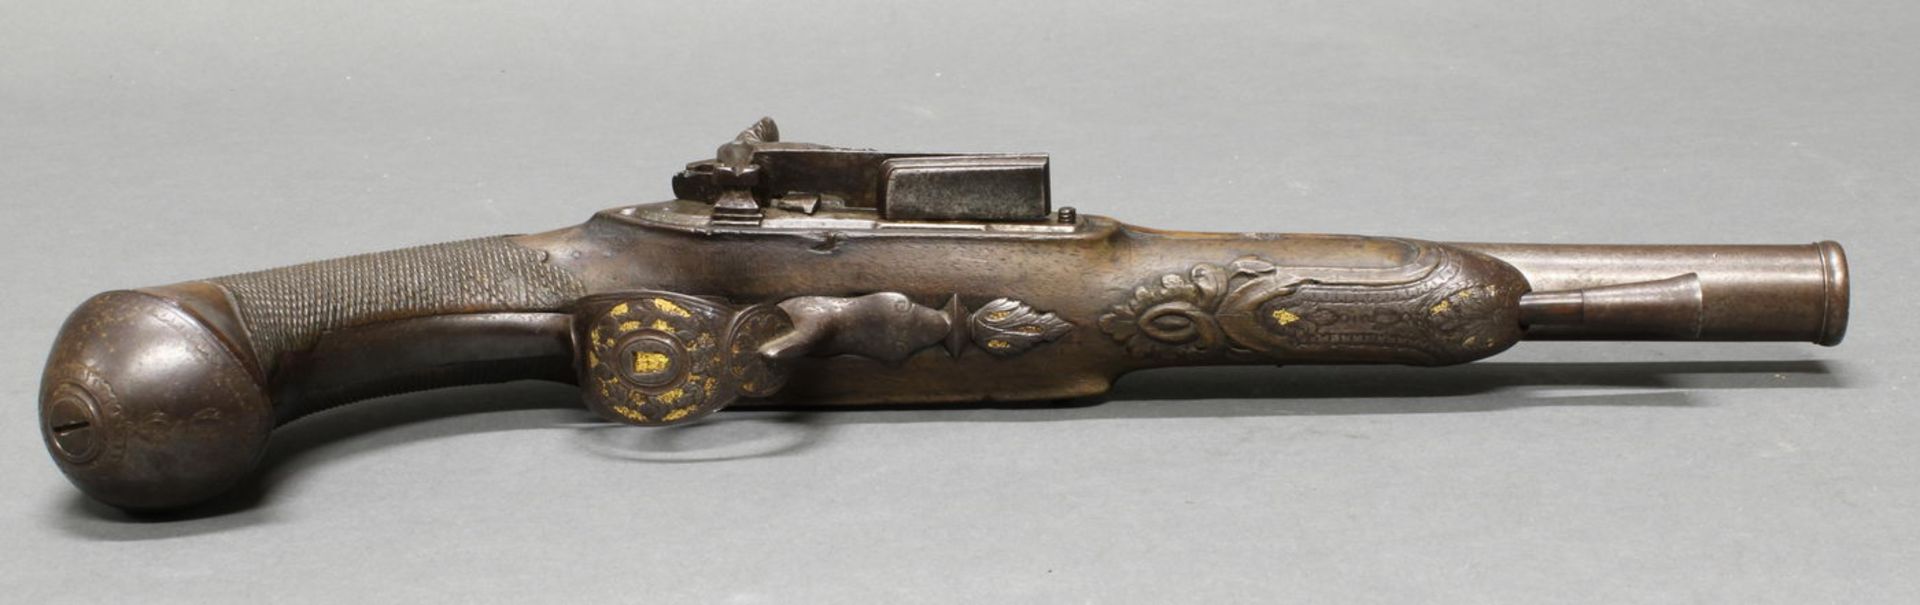 Paar Perkussions-Pistolen, Spanien, signiert und datiert D ERRAD(s) EN EIBAR, ANO D 1818, wohl Besi - Image 4 of 6